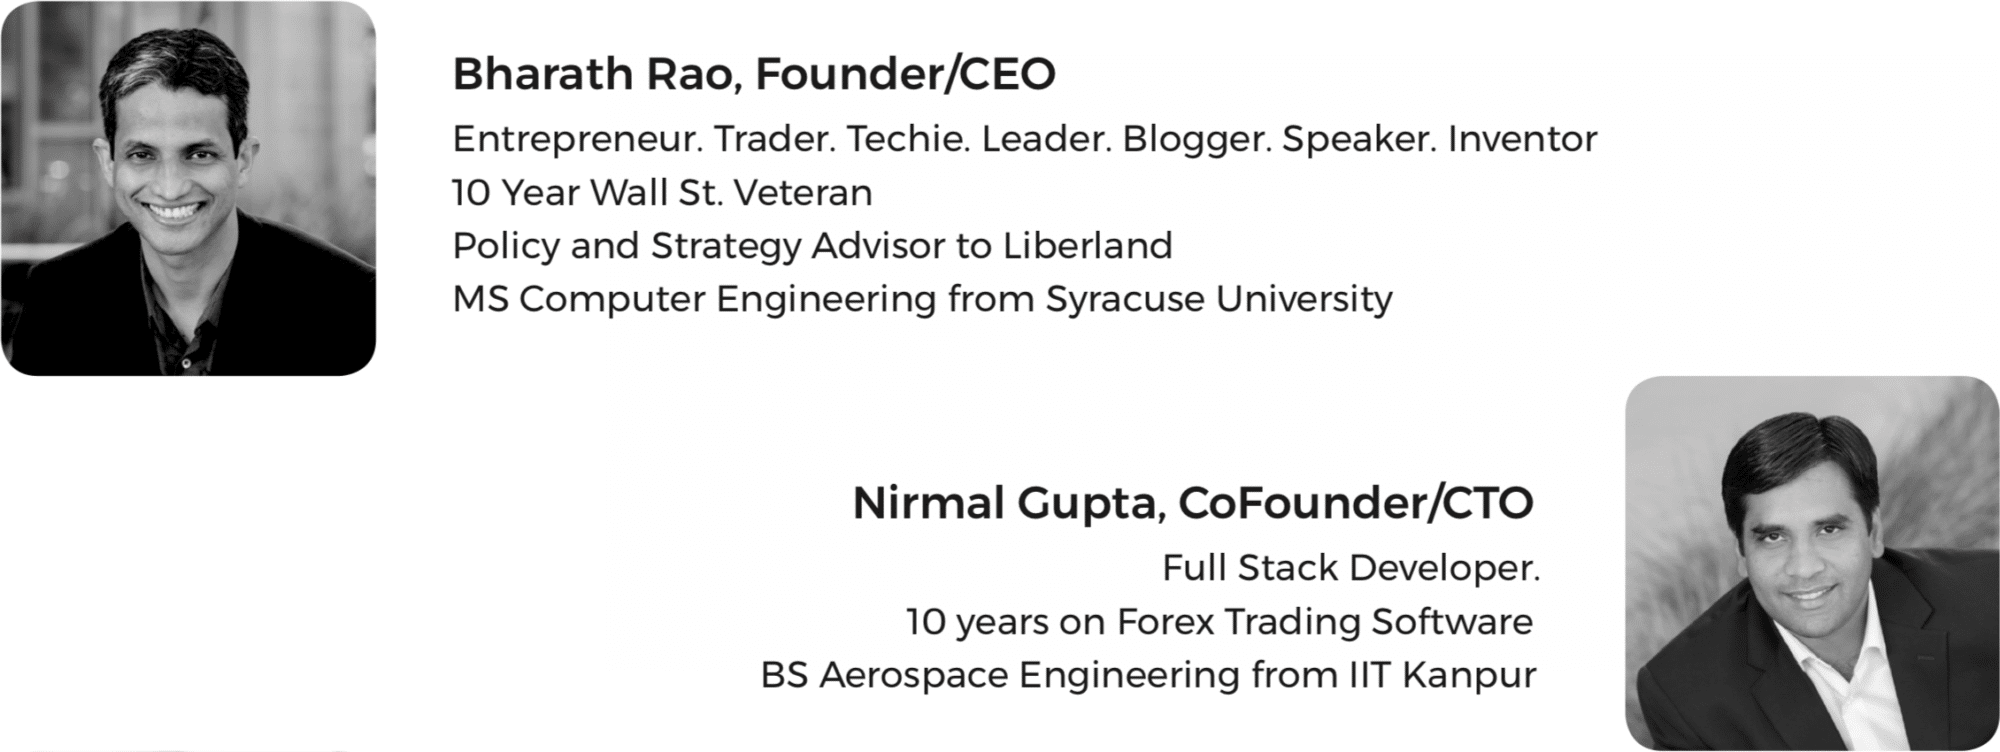 LEVERJ Founders Bharath Rao and Nirmal Gupta